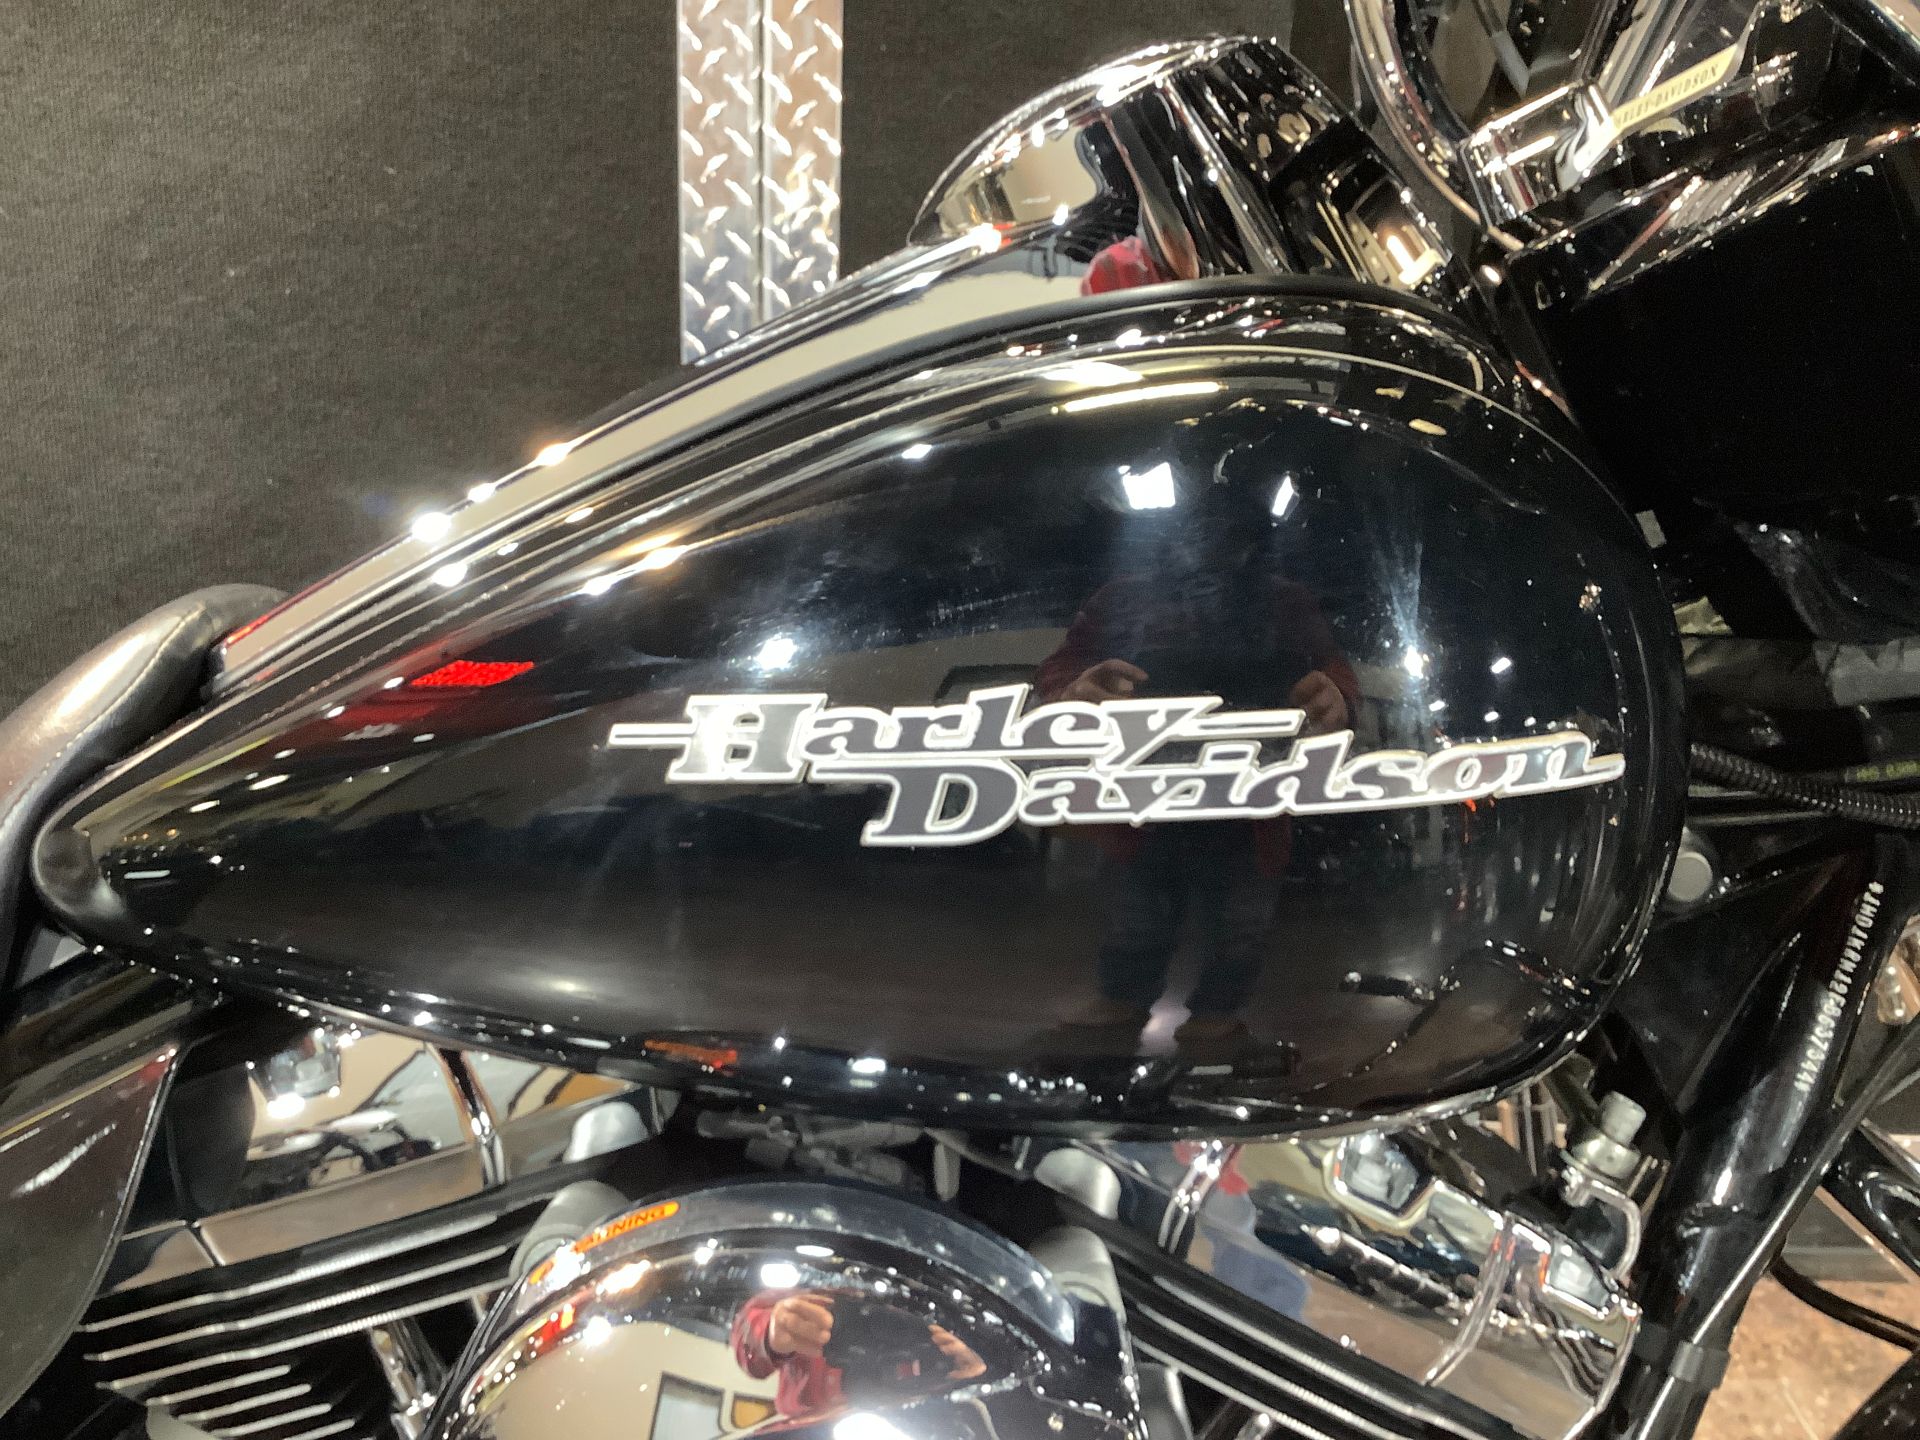 2015 Harley-Davidson Street Glide® Special in Burlington, Iowa - Photo 8